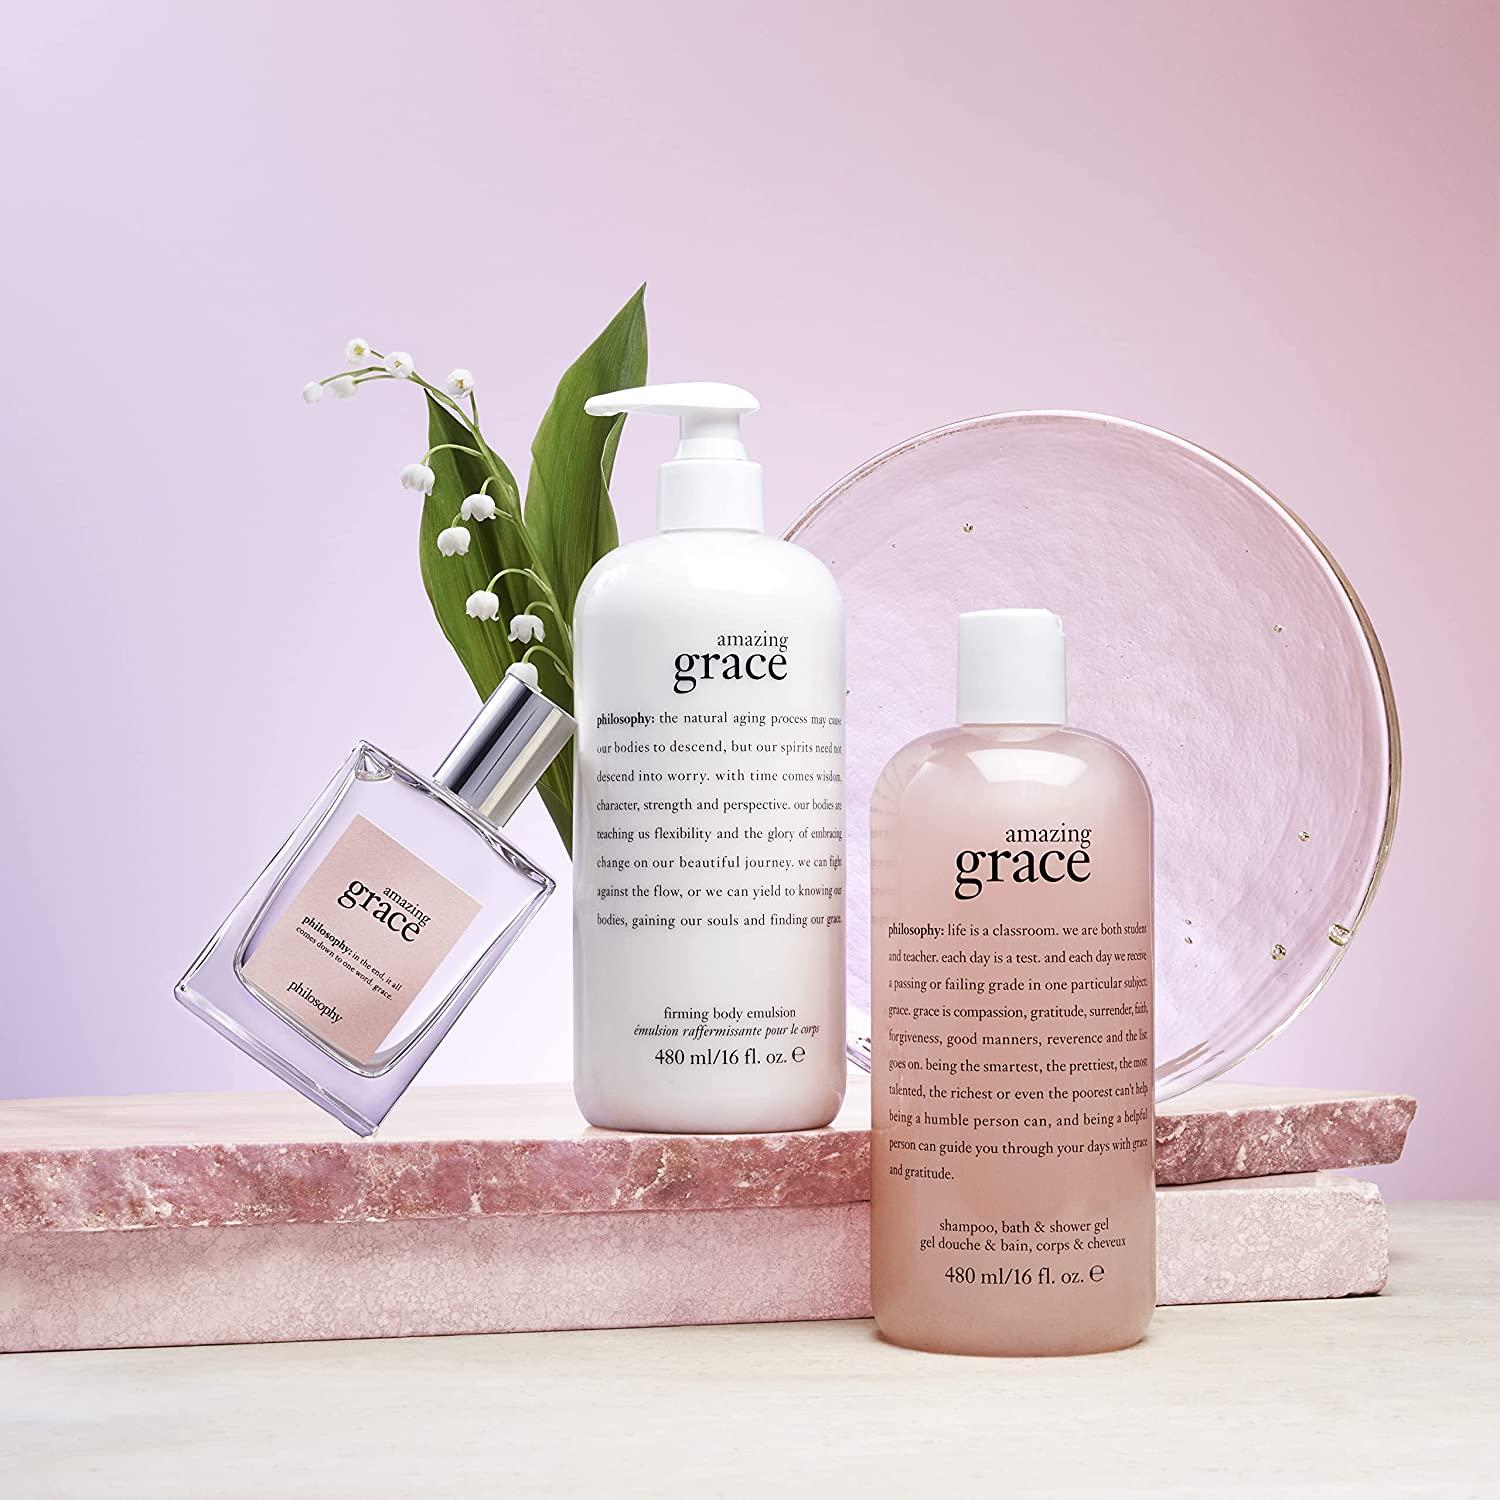 Philosophy Pure Grace 8 oz Shampoo Bath & Shower Gel